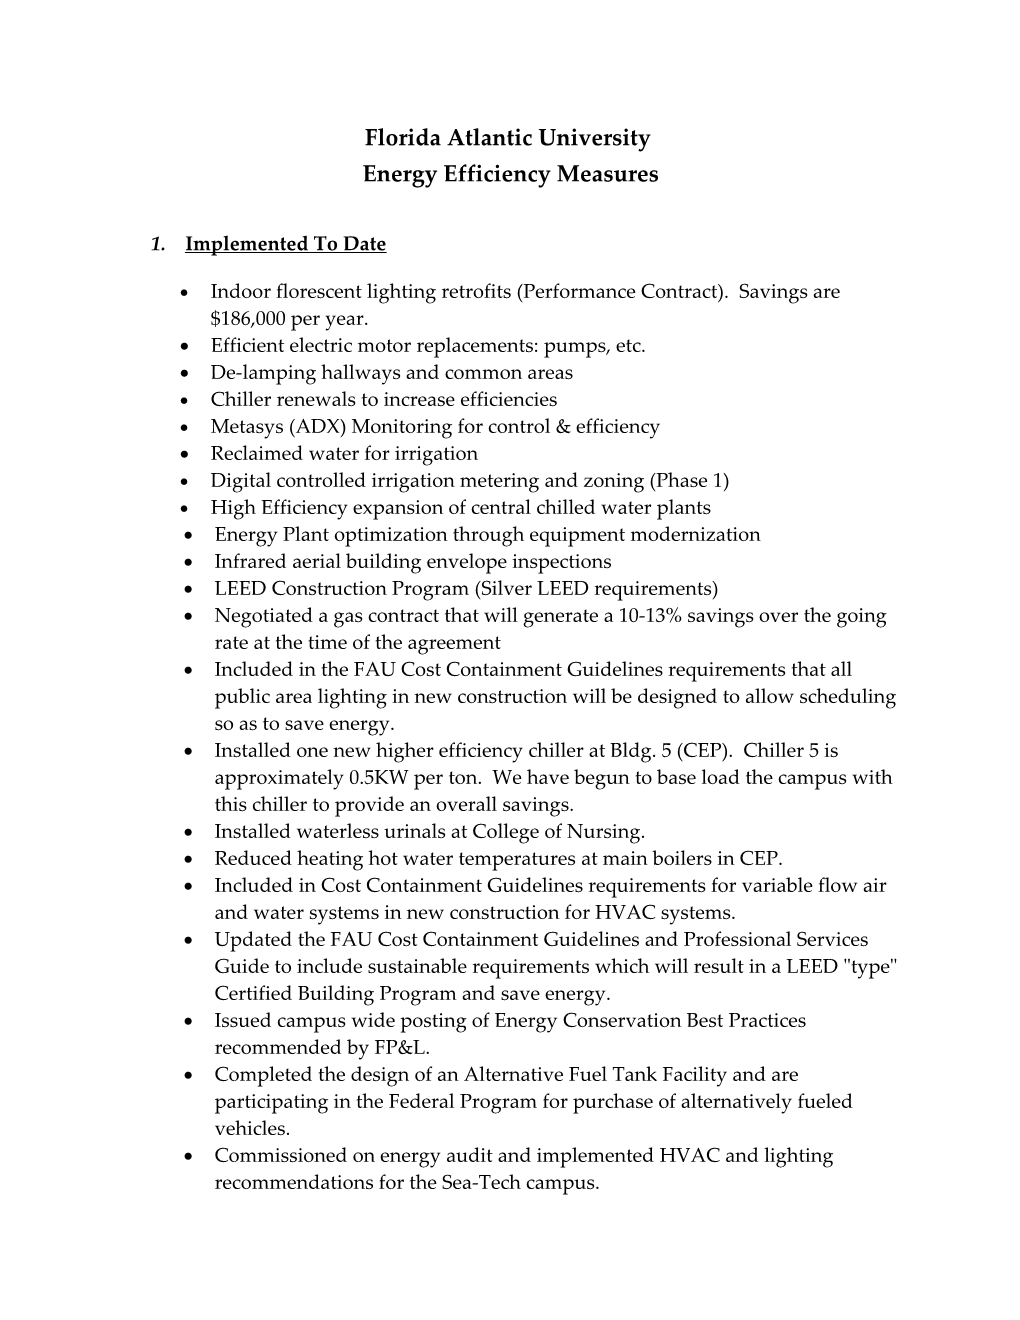 University of Florida Energy Efficiency